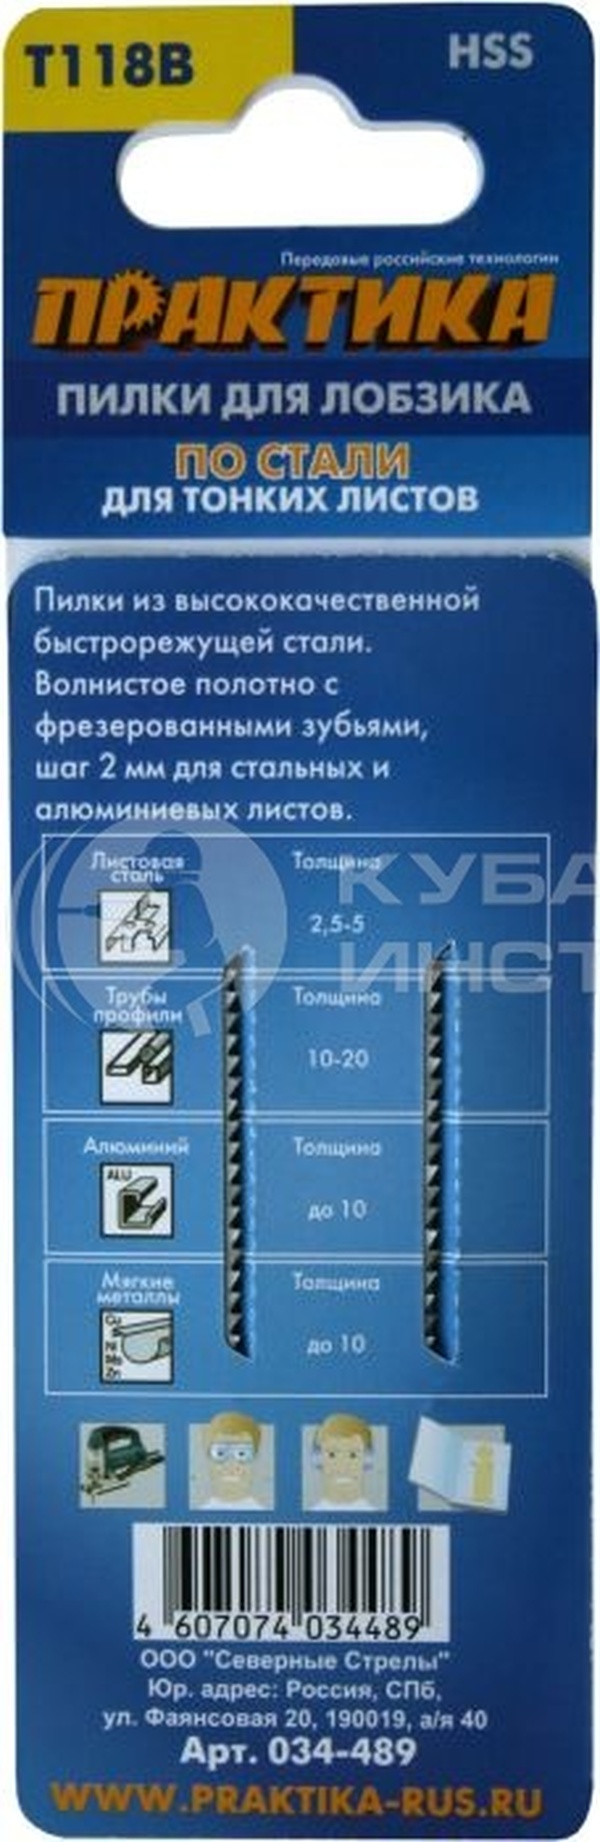 Пилки для лобзика по стали Практика T118B HSS 76*50мм (2шт) 034-489